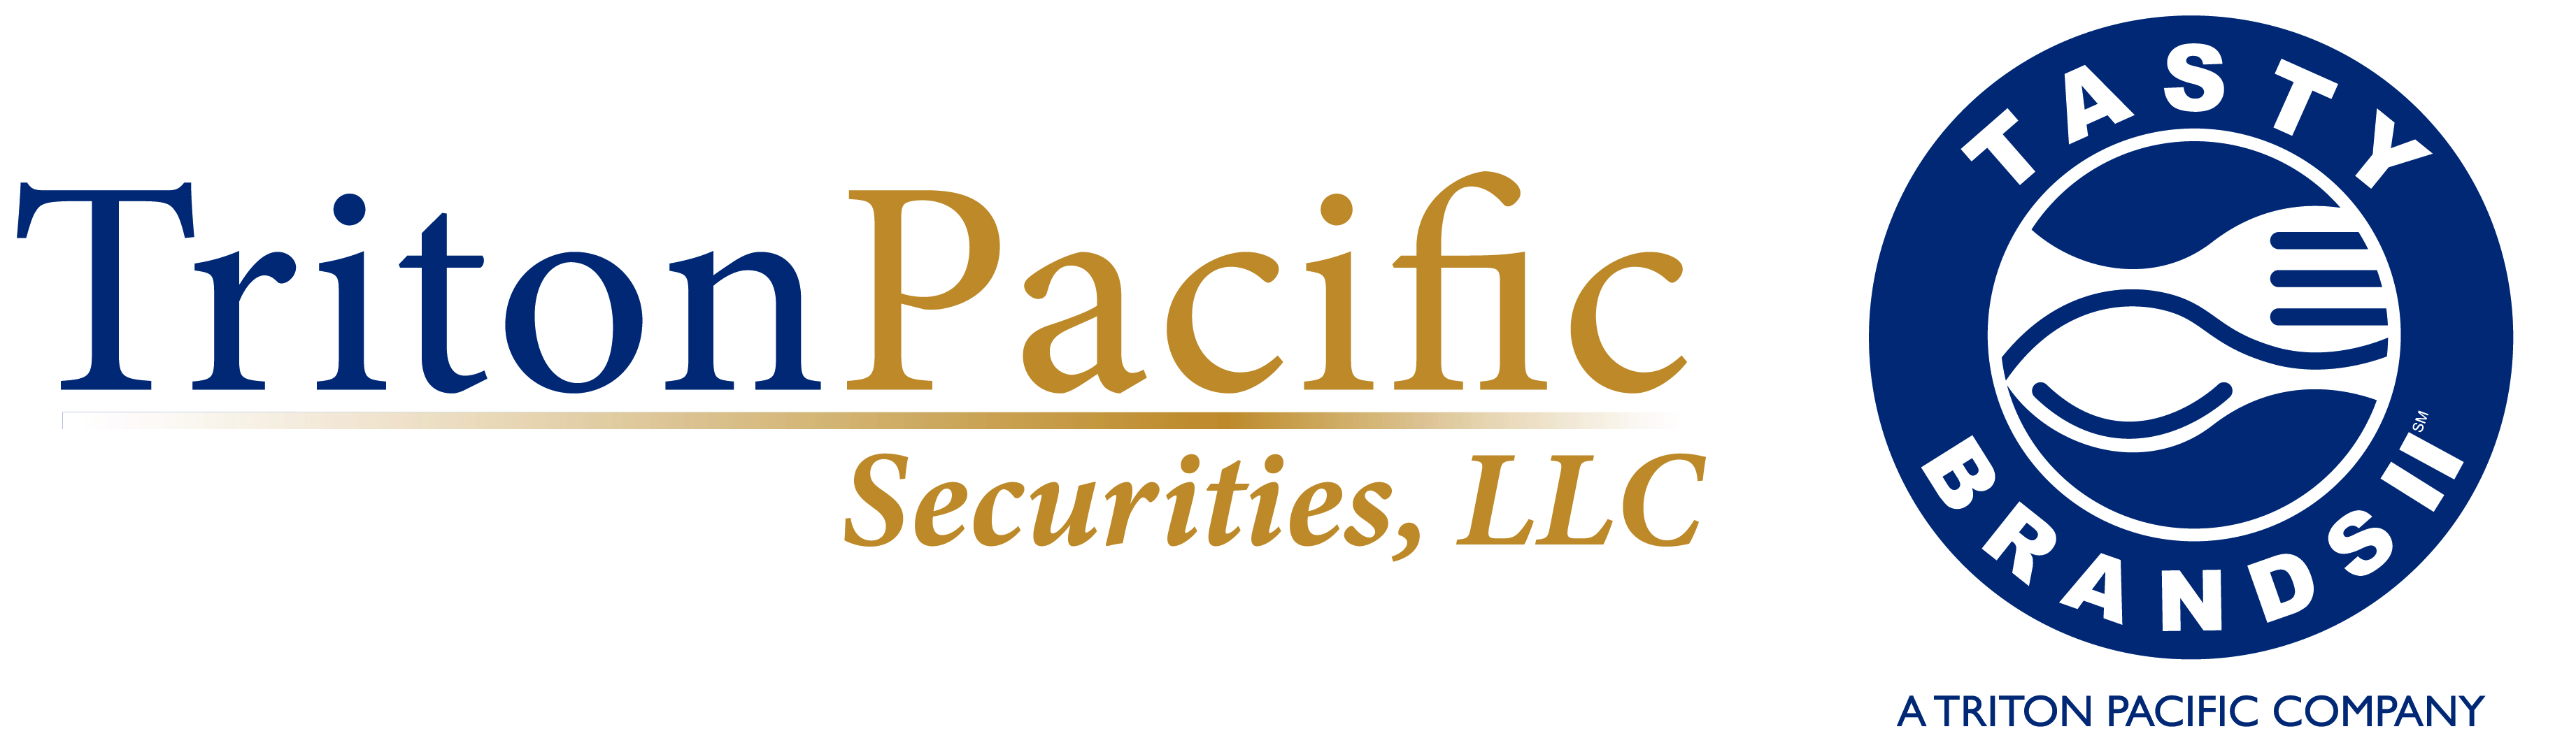 Triton Pacific Securities logo